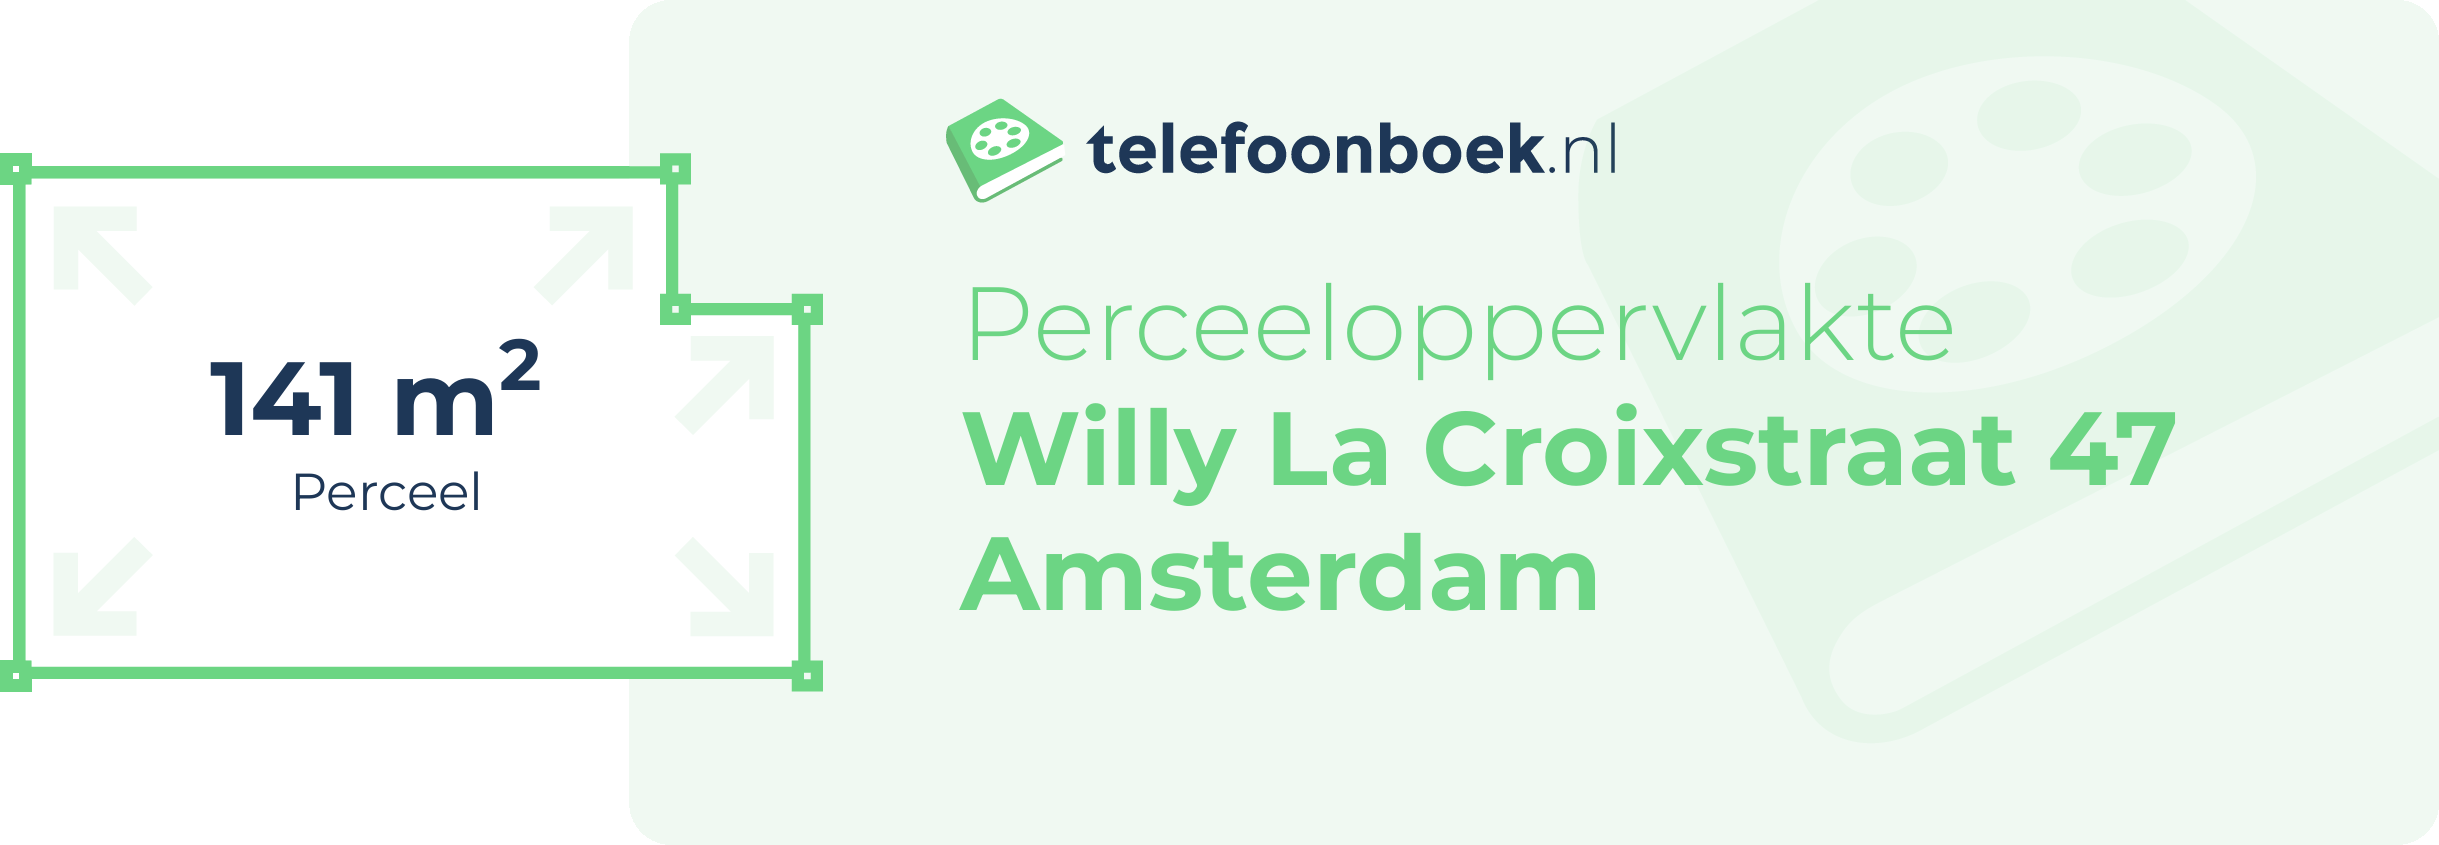 Perceeloppervlakte Willy La Croixstraat 47 Amsterdam